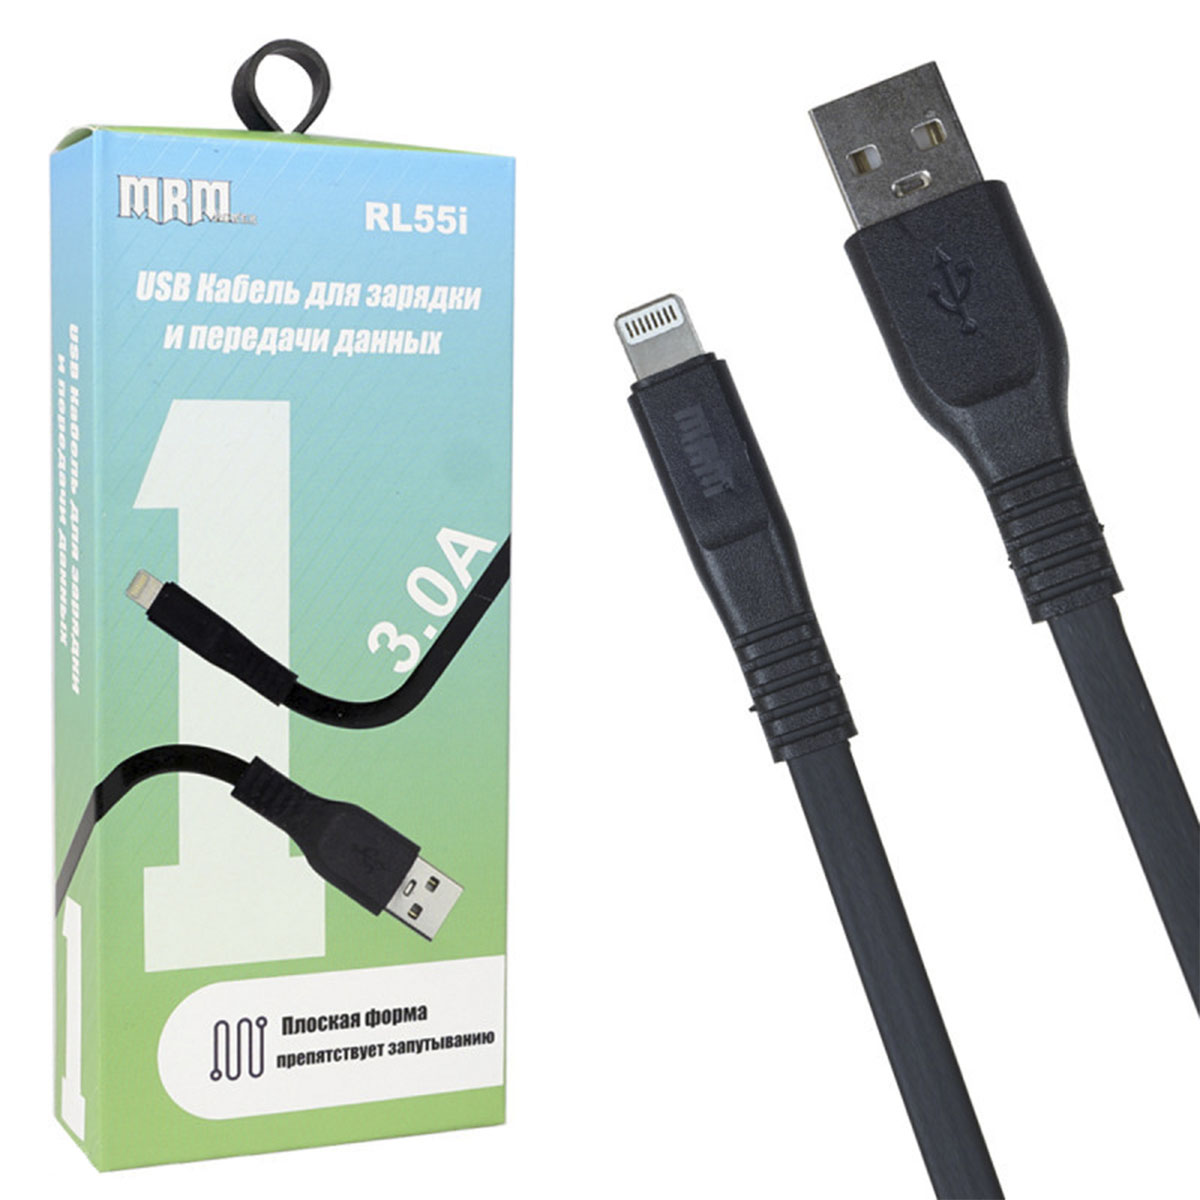 USB Дата кабель MRM RL55i, APPLE Lightning 8 pin, силикон, плоский, длина 1 метр, 3.0 A, цвет черный